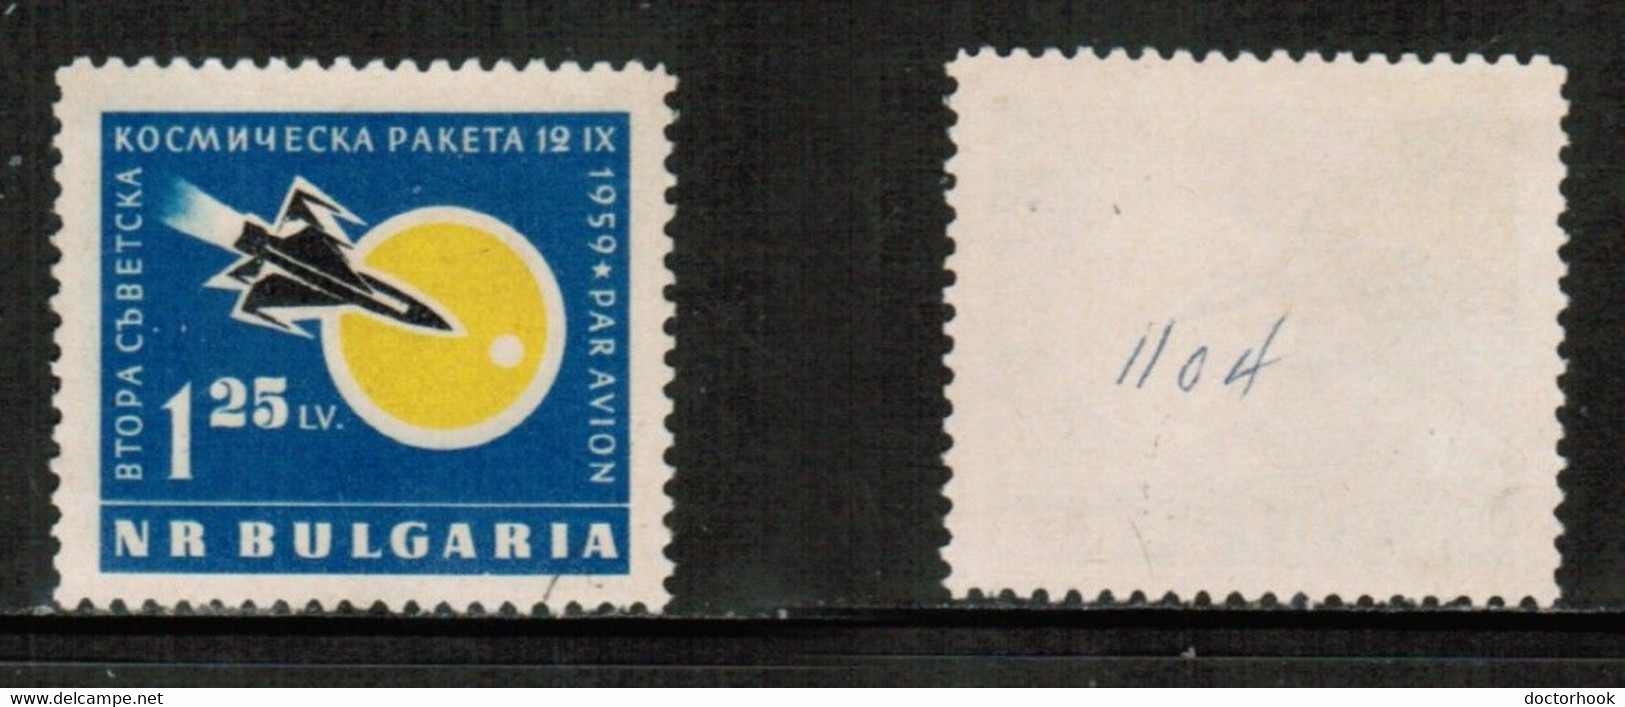 BULGARIA   Scott # C 79 USED (CONDITION AS PER SCAN) (Stamp Scan # 878-6) - Posta Aerea